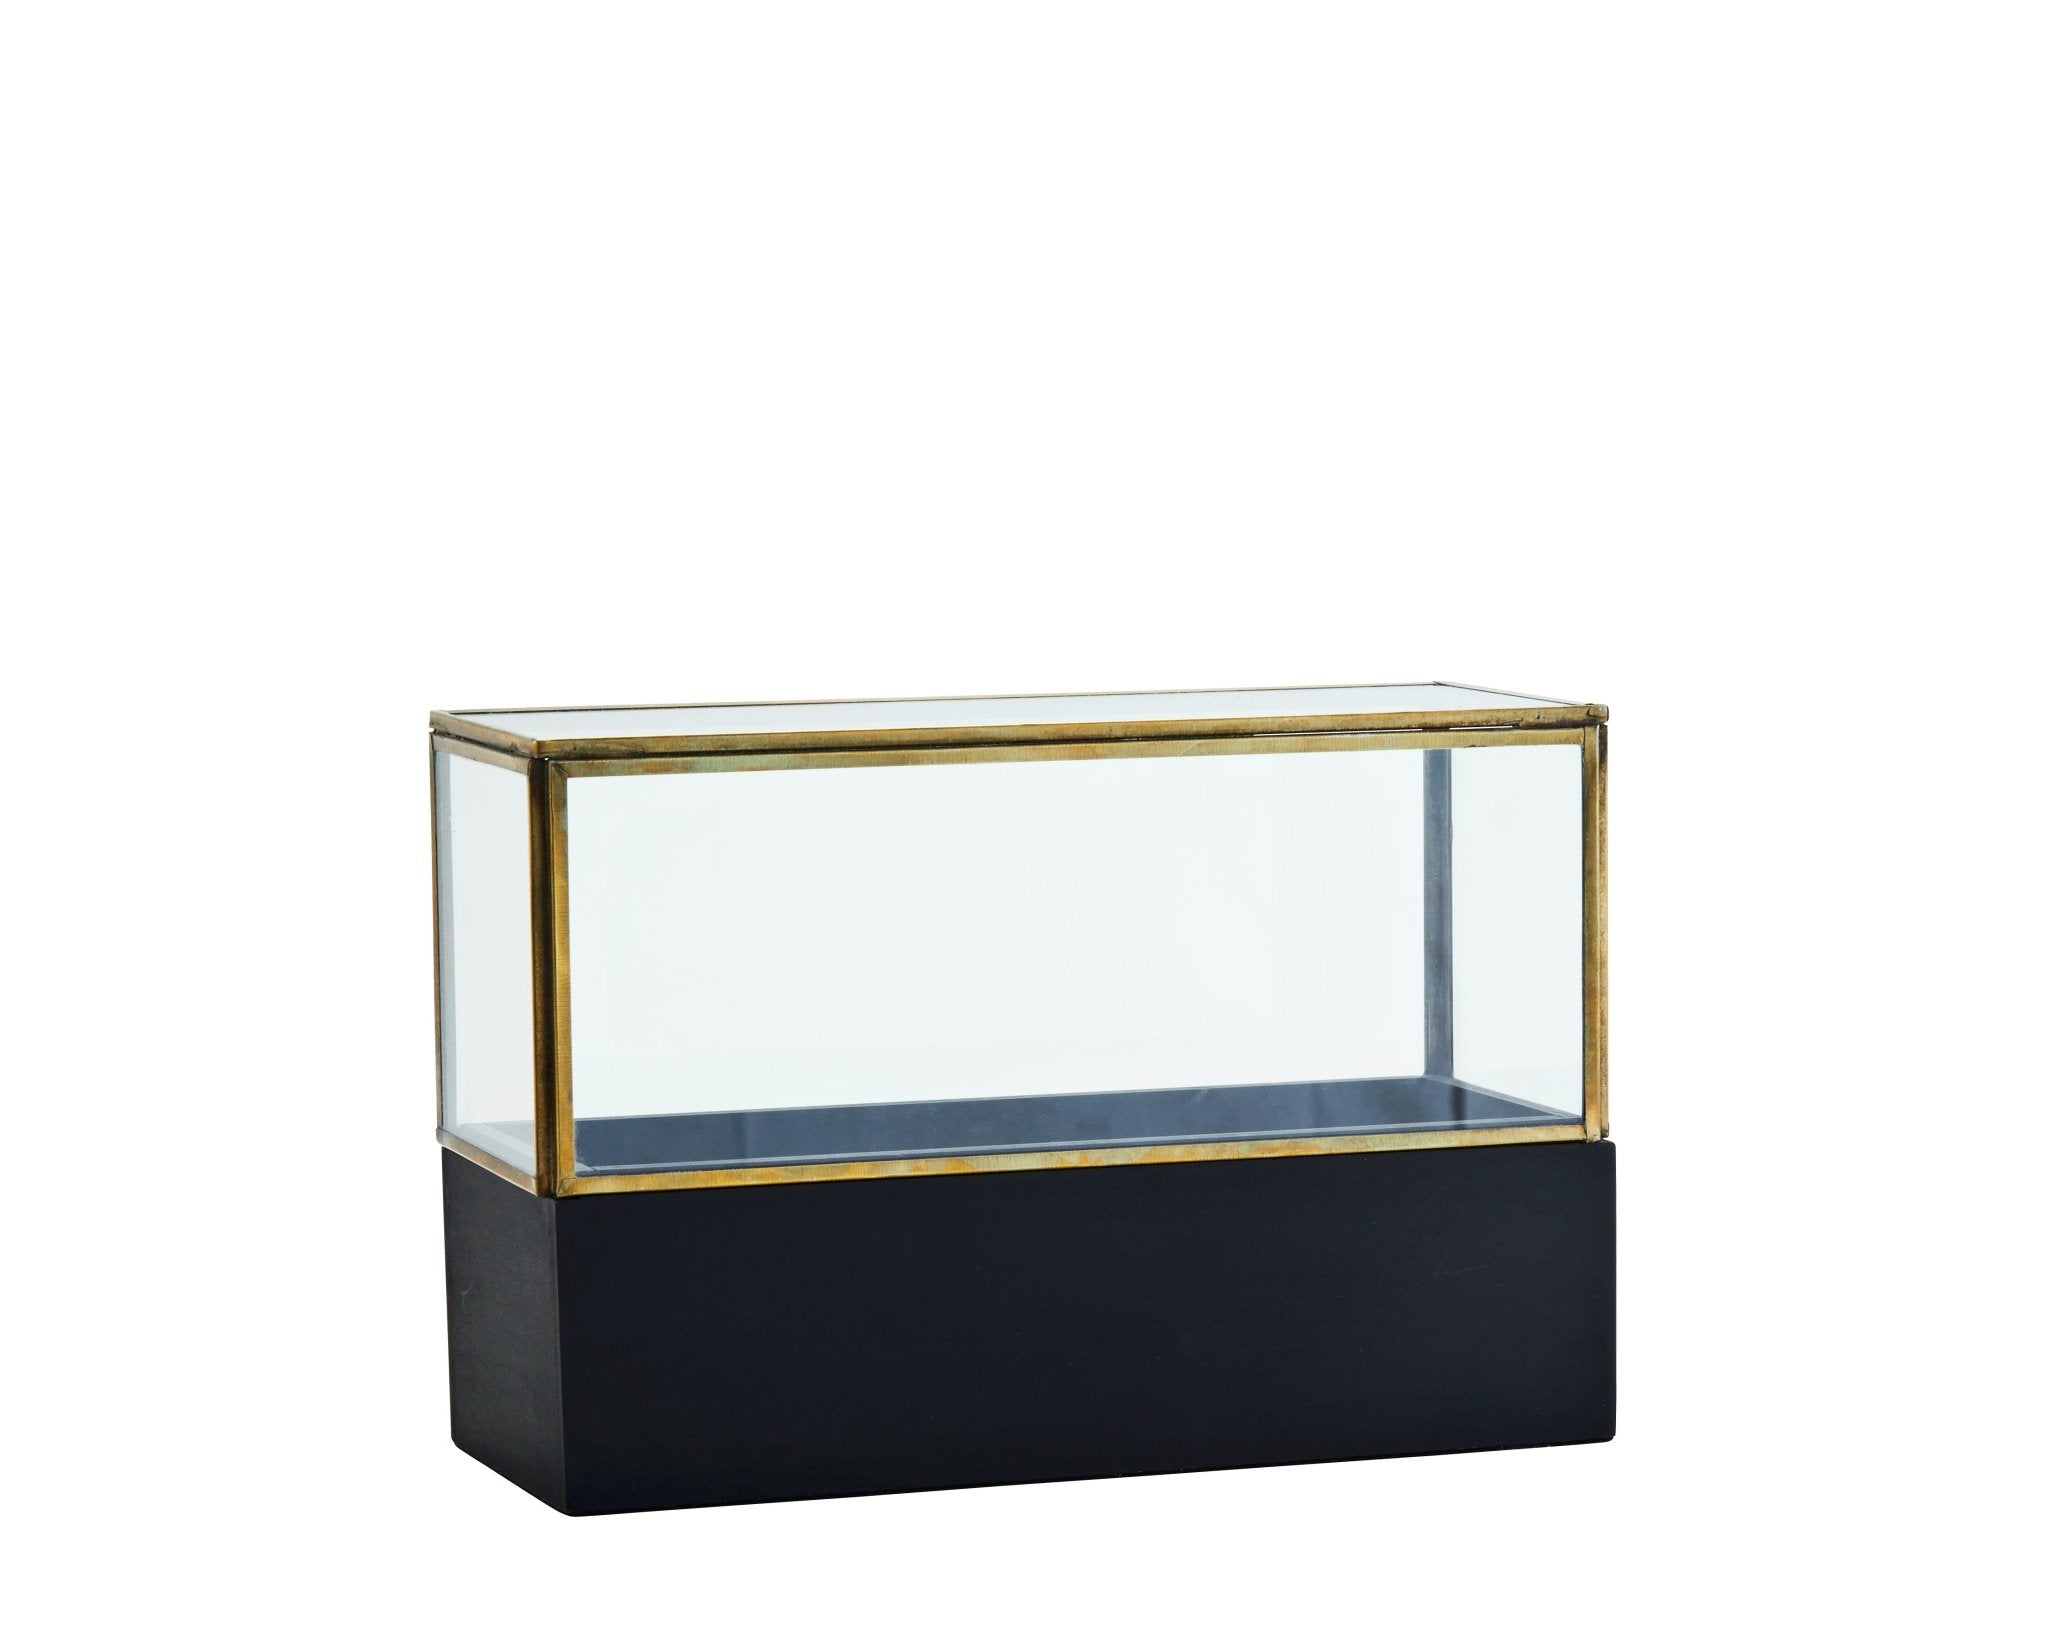 Glass box with a wooden base - Natalia Willmott